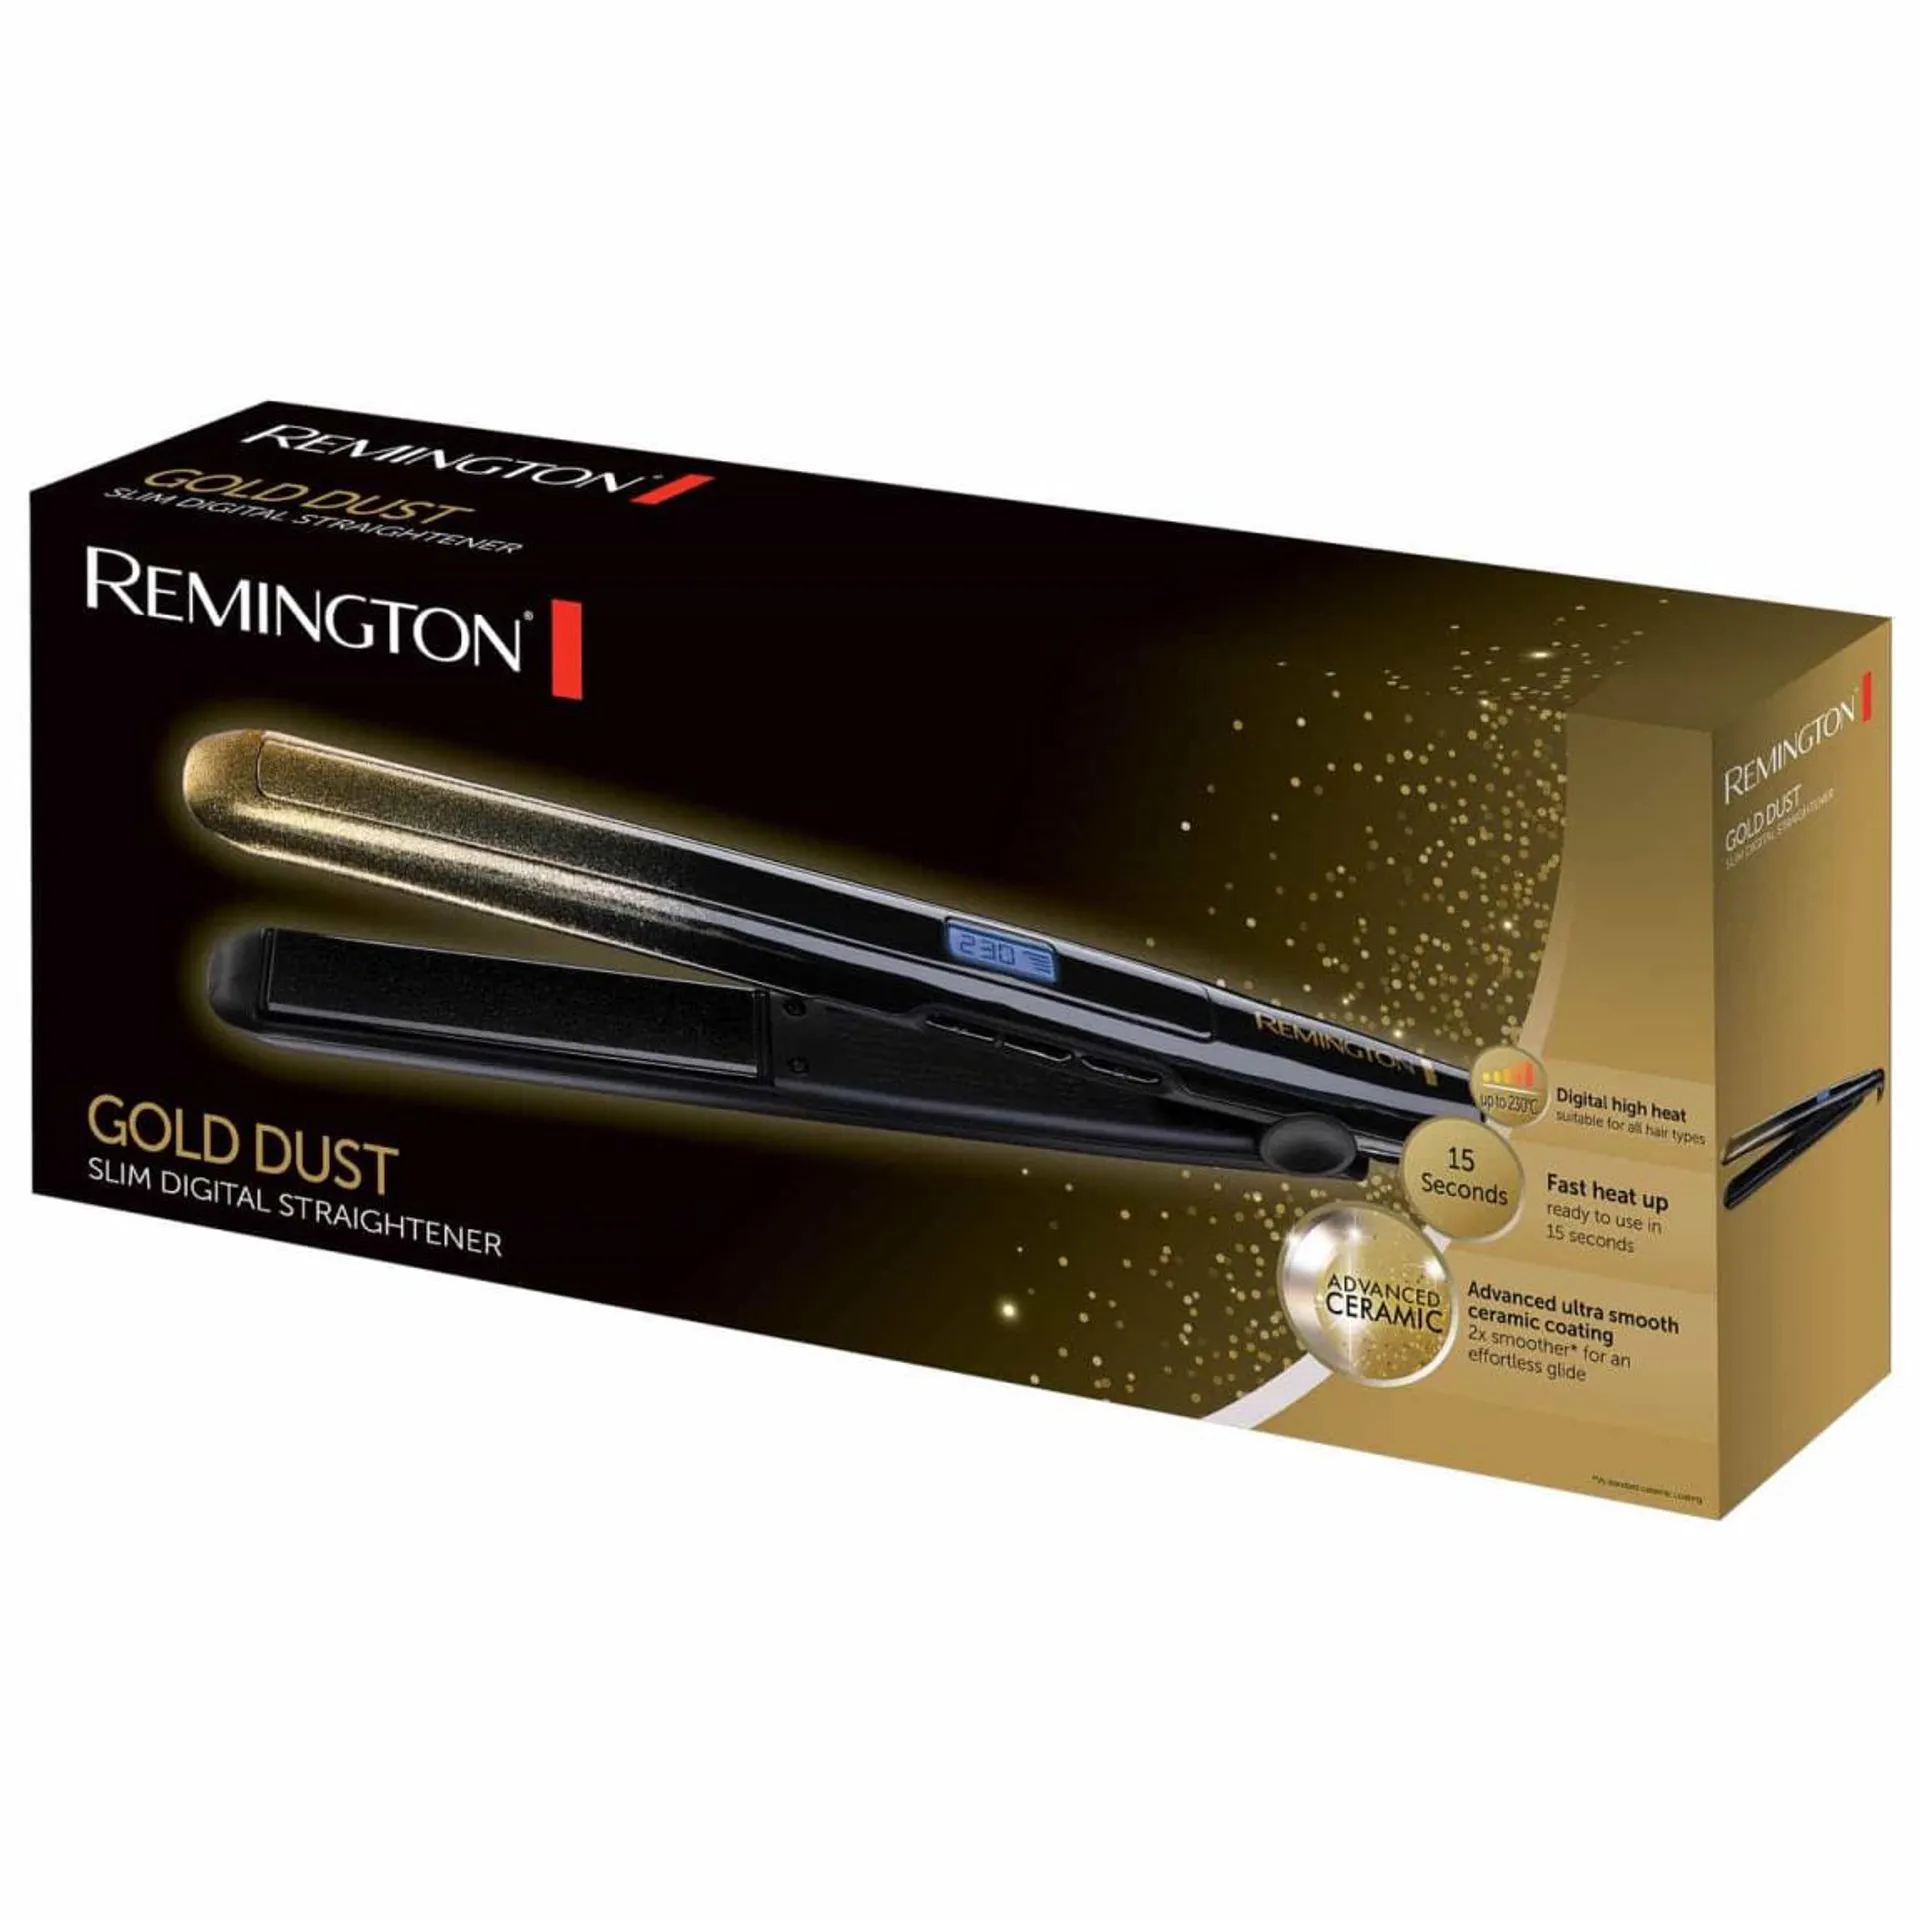 Remington Gold Dust Slim Digital Straightener